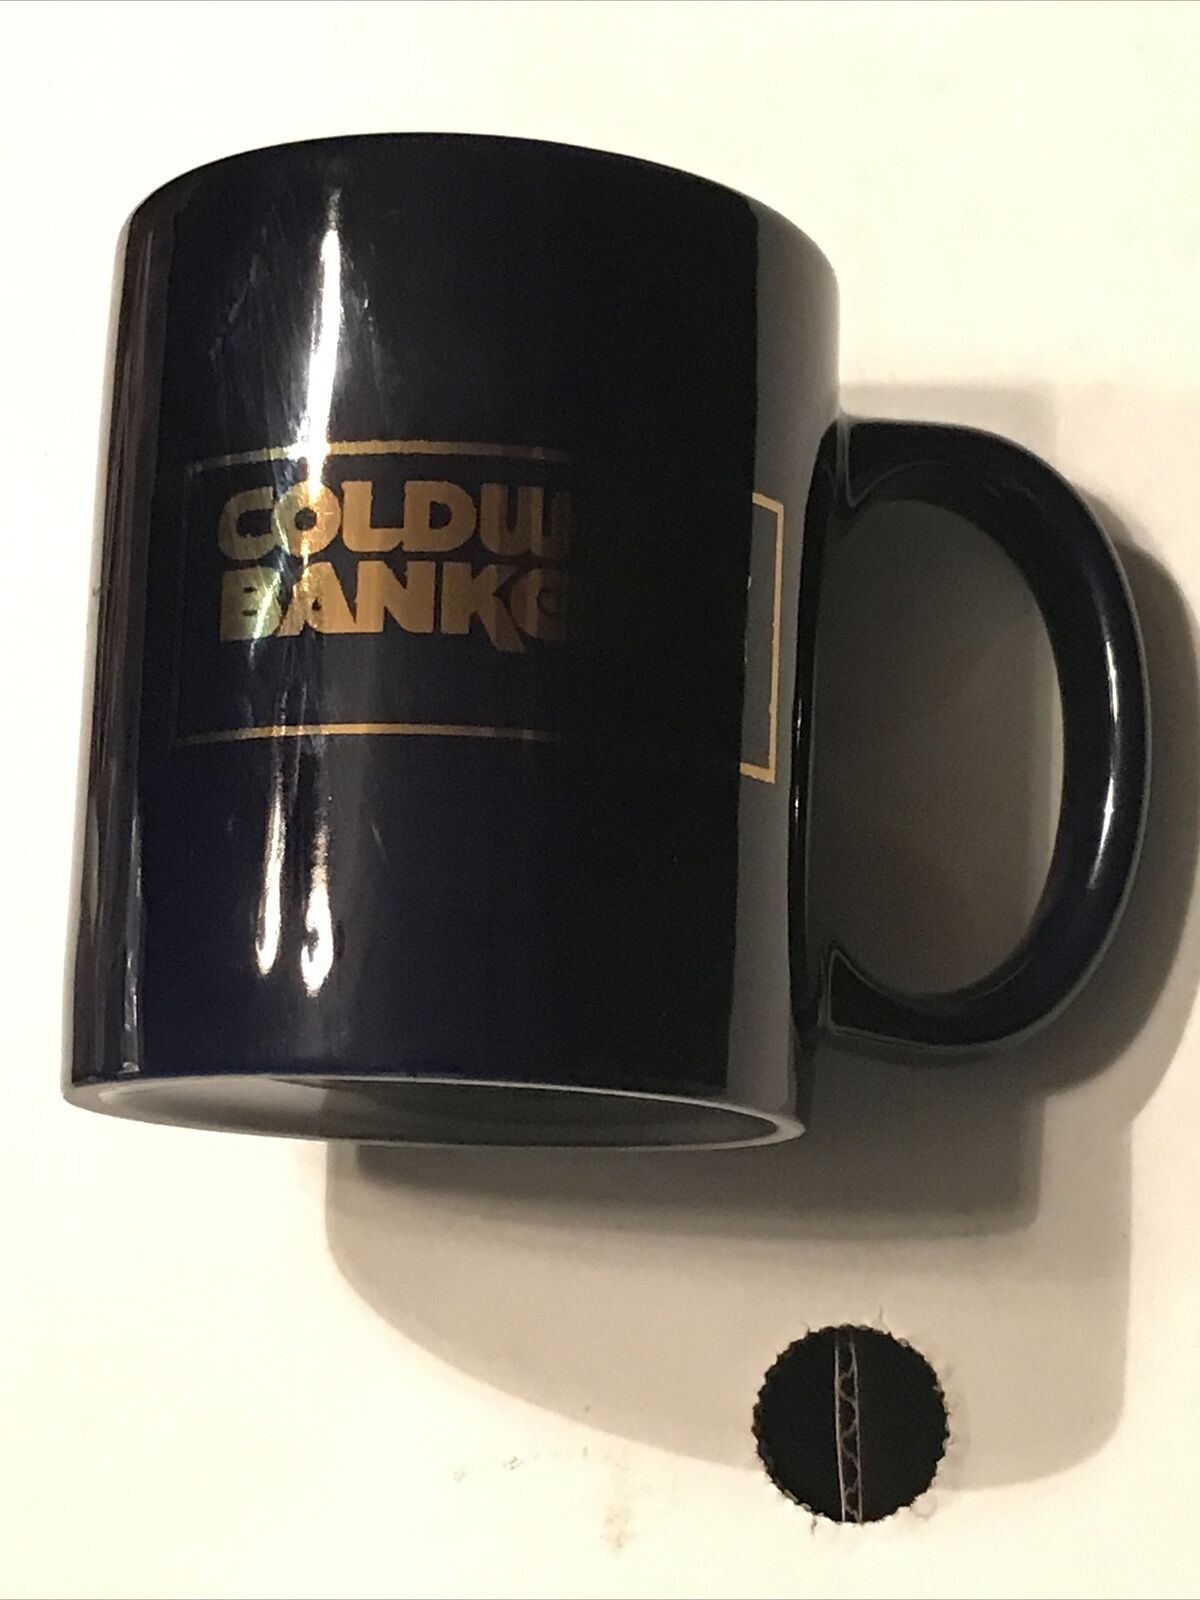 Coldwell Banker ceramic coffee mug vintage rare